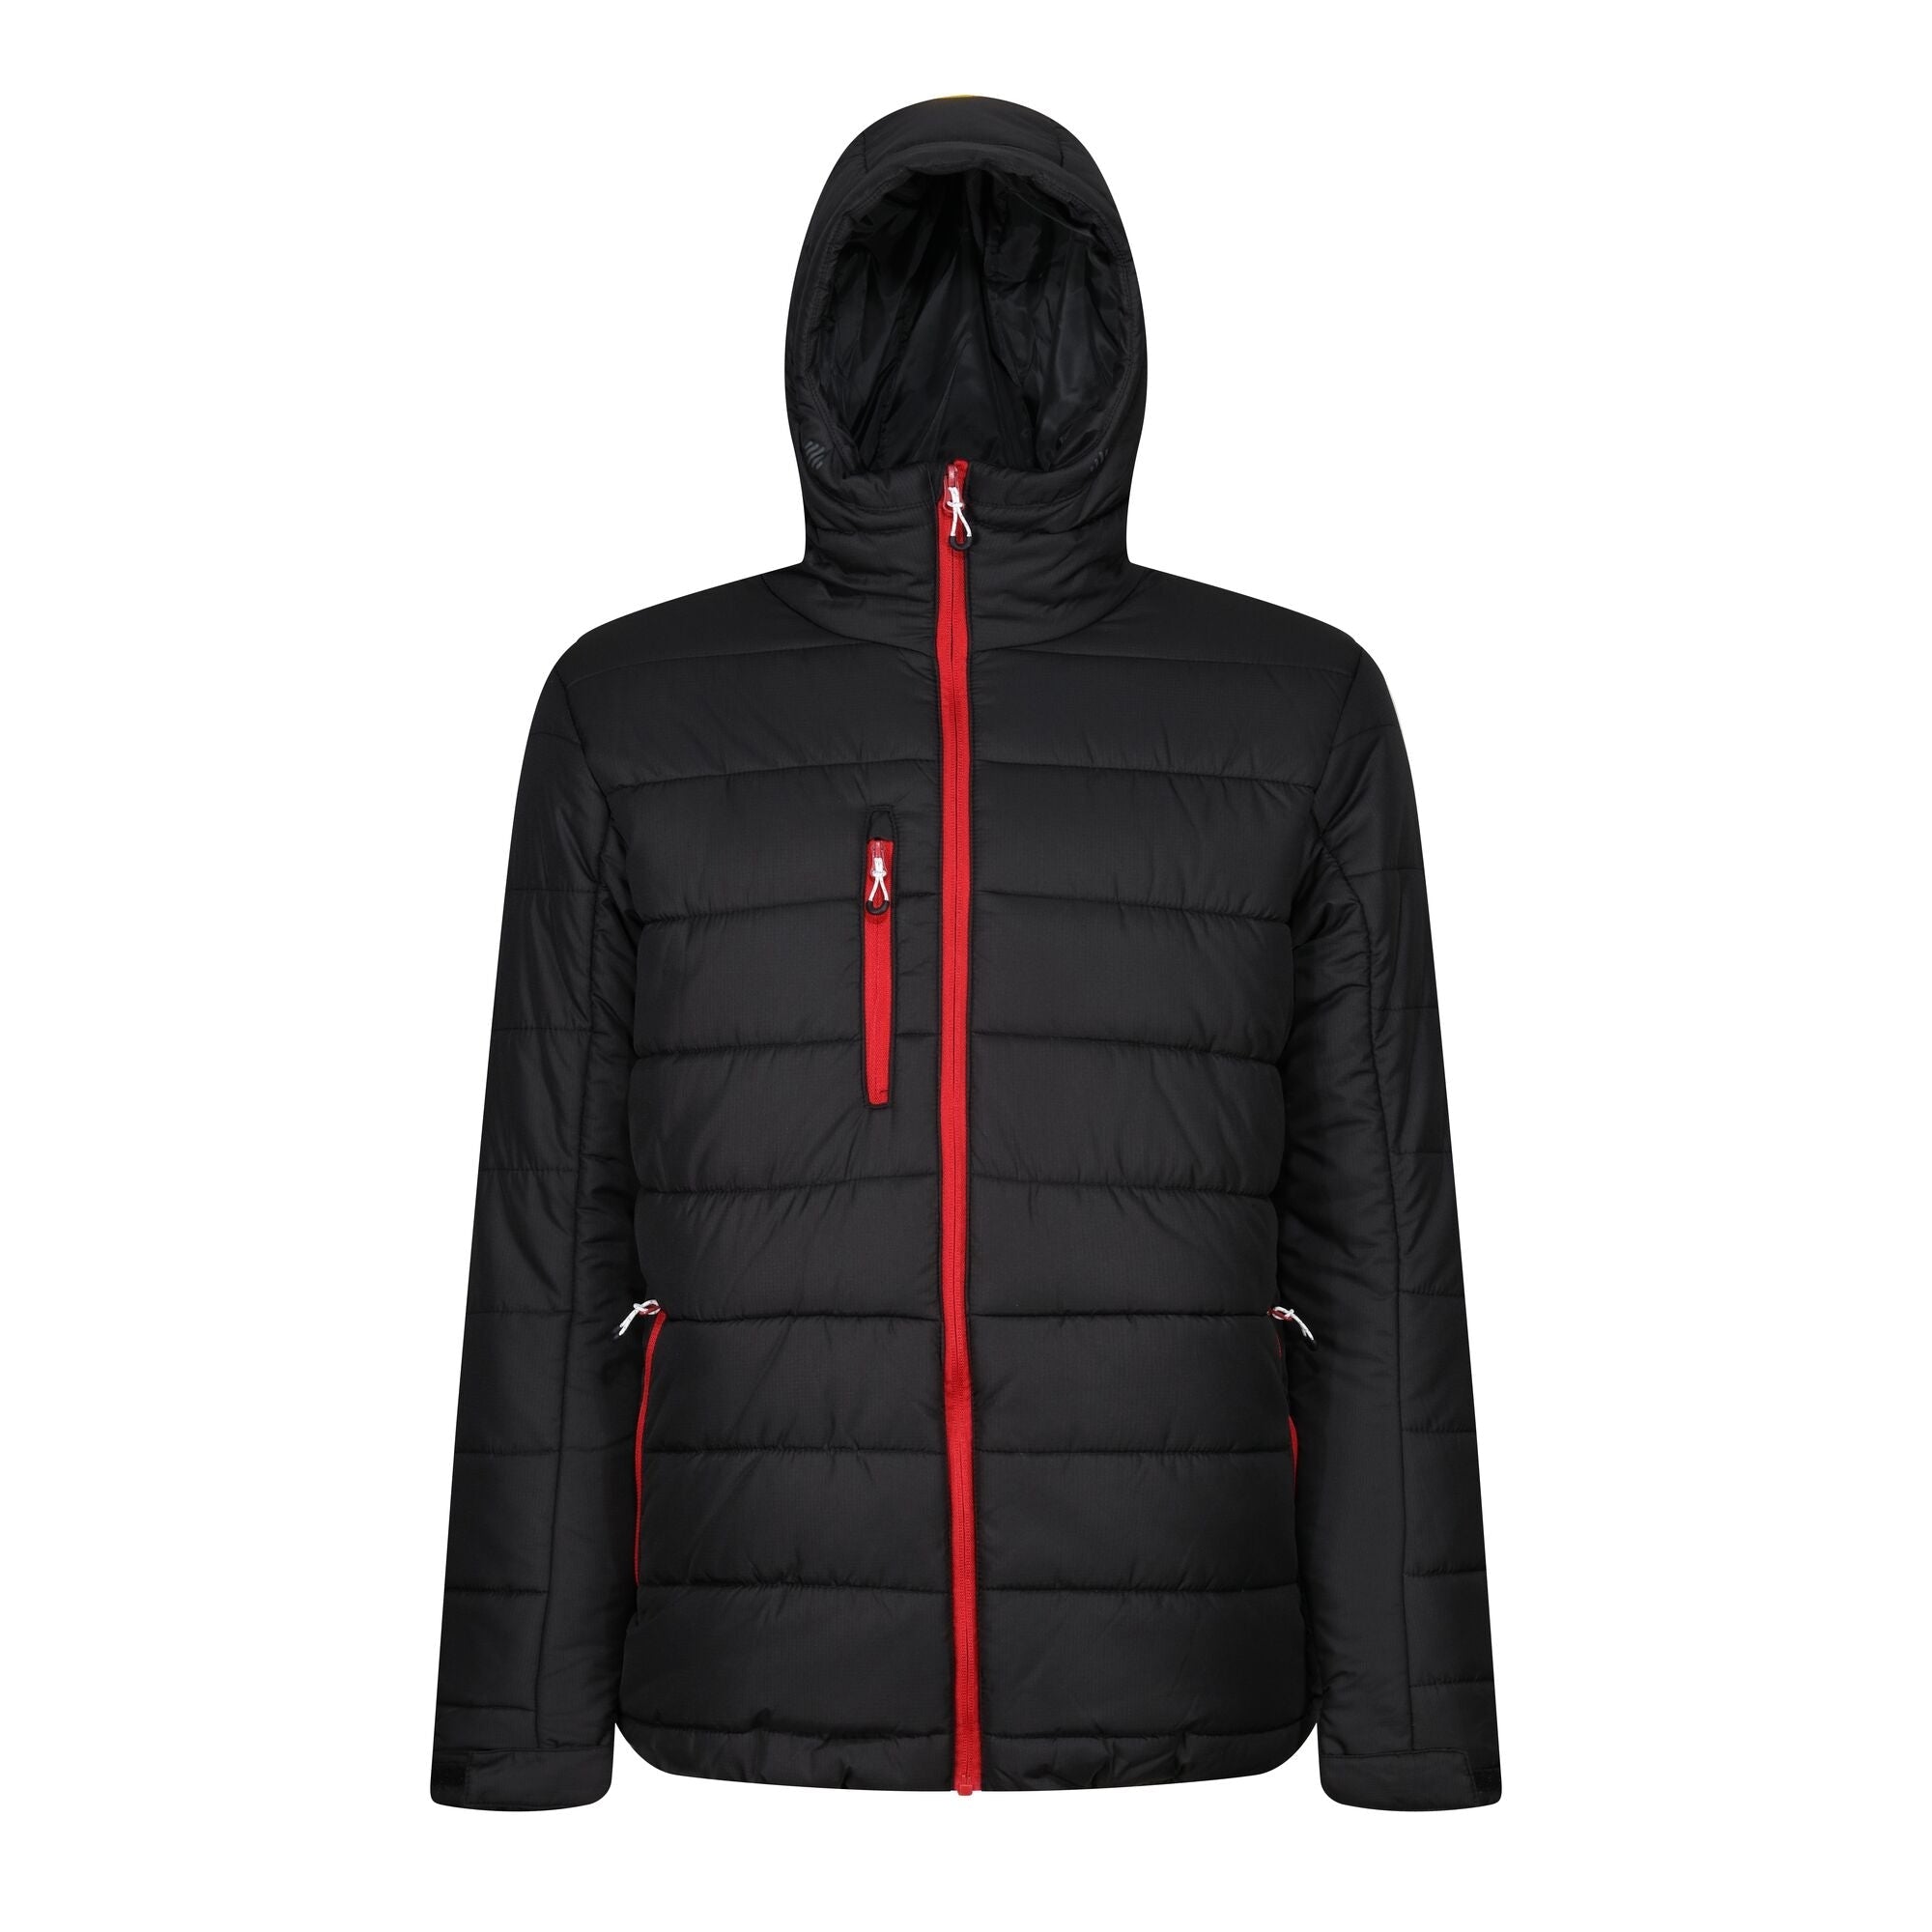 Regatta Navigate Thermal Jacket - Black/Classic Red